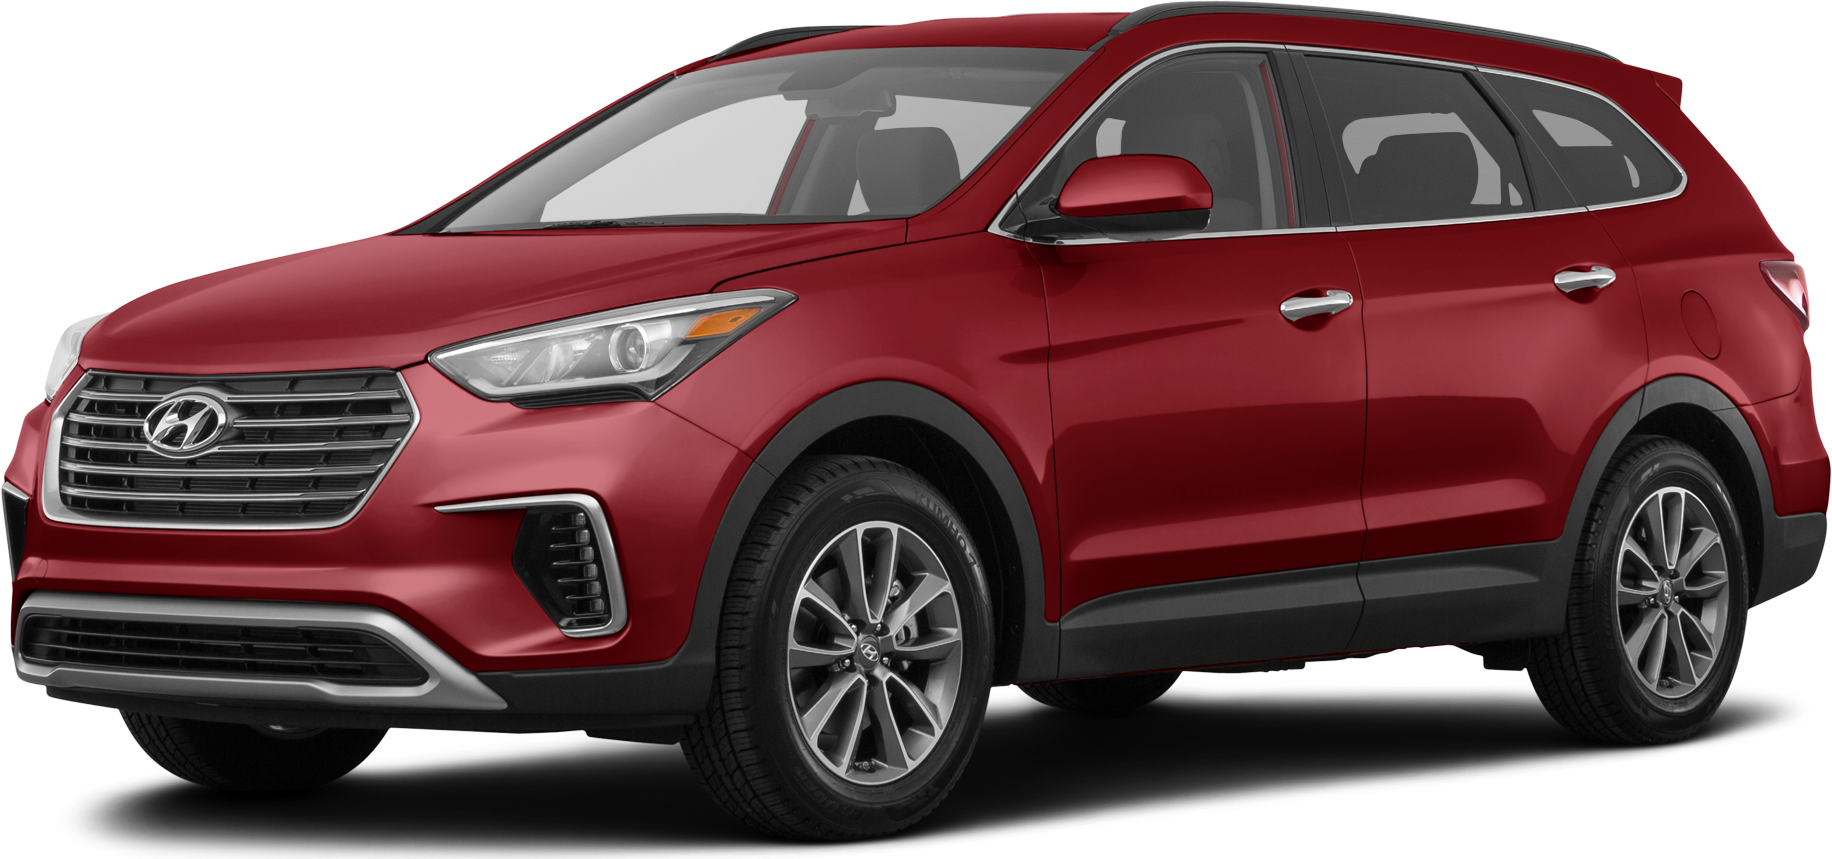 2018 Hyundai Santa Fe Review Pricing and Specs